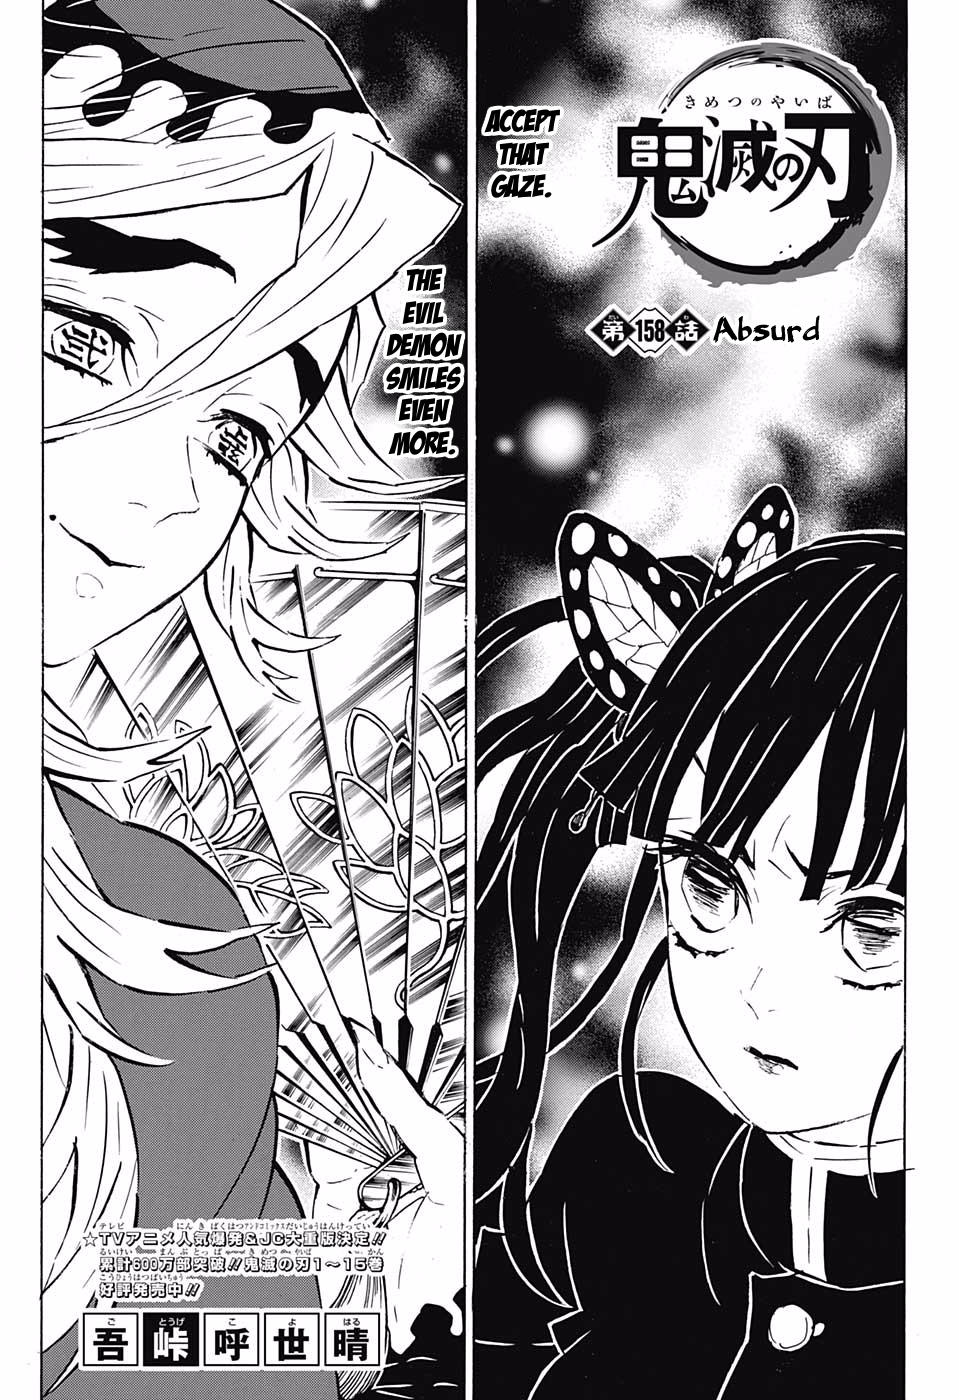 Demon Slayer Kimetsu No Yaiba Chapter 158 Demon Slayer Manga Online